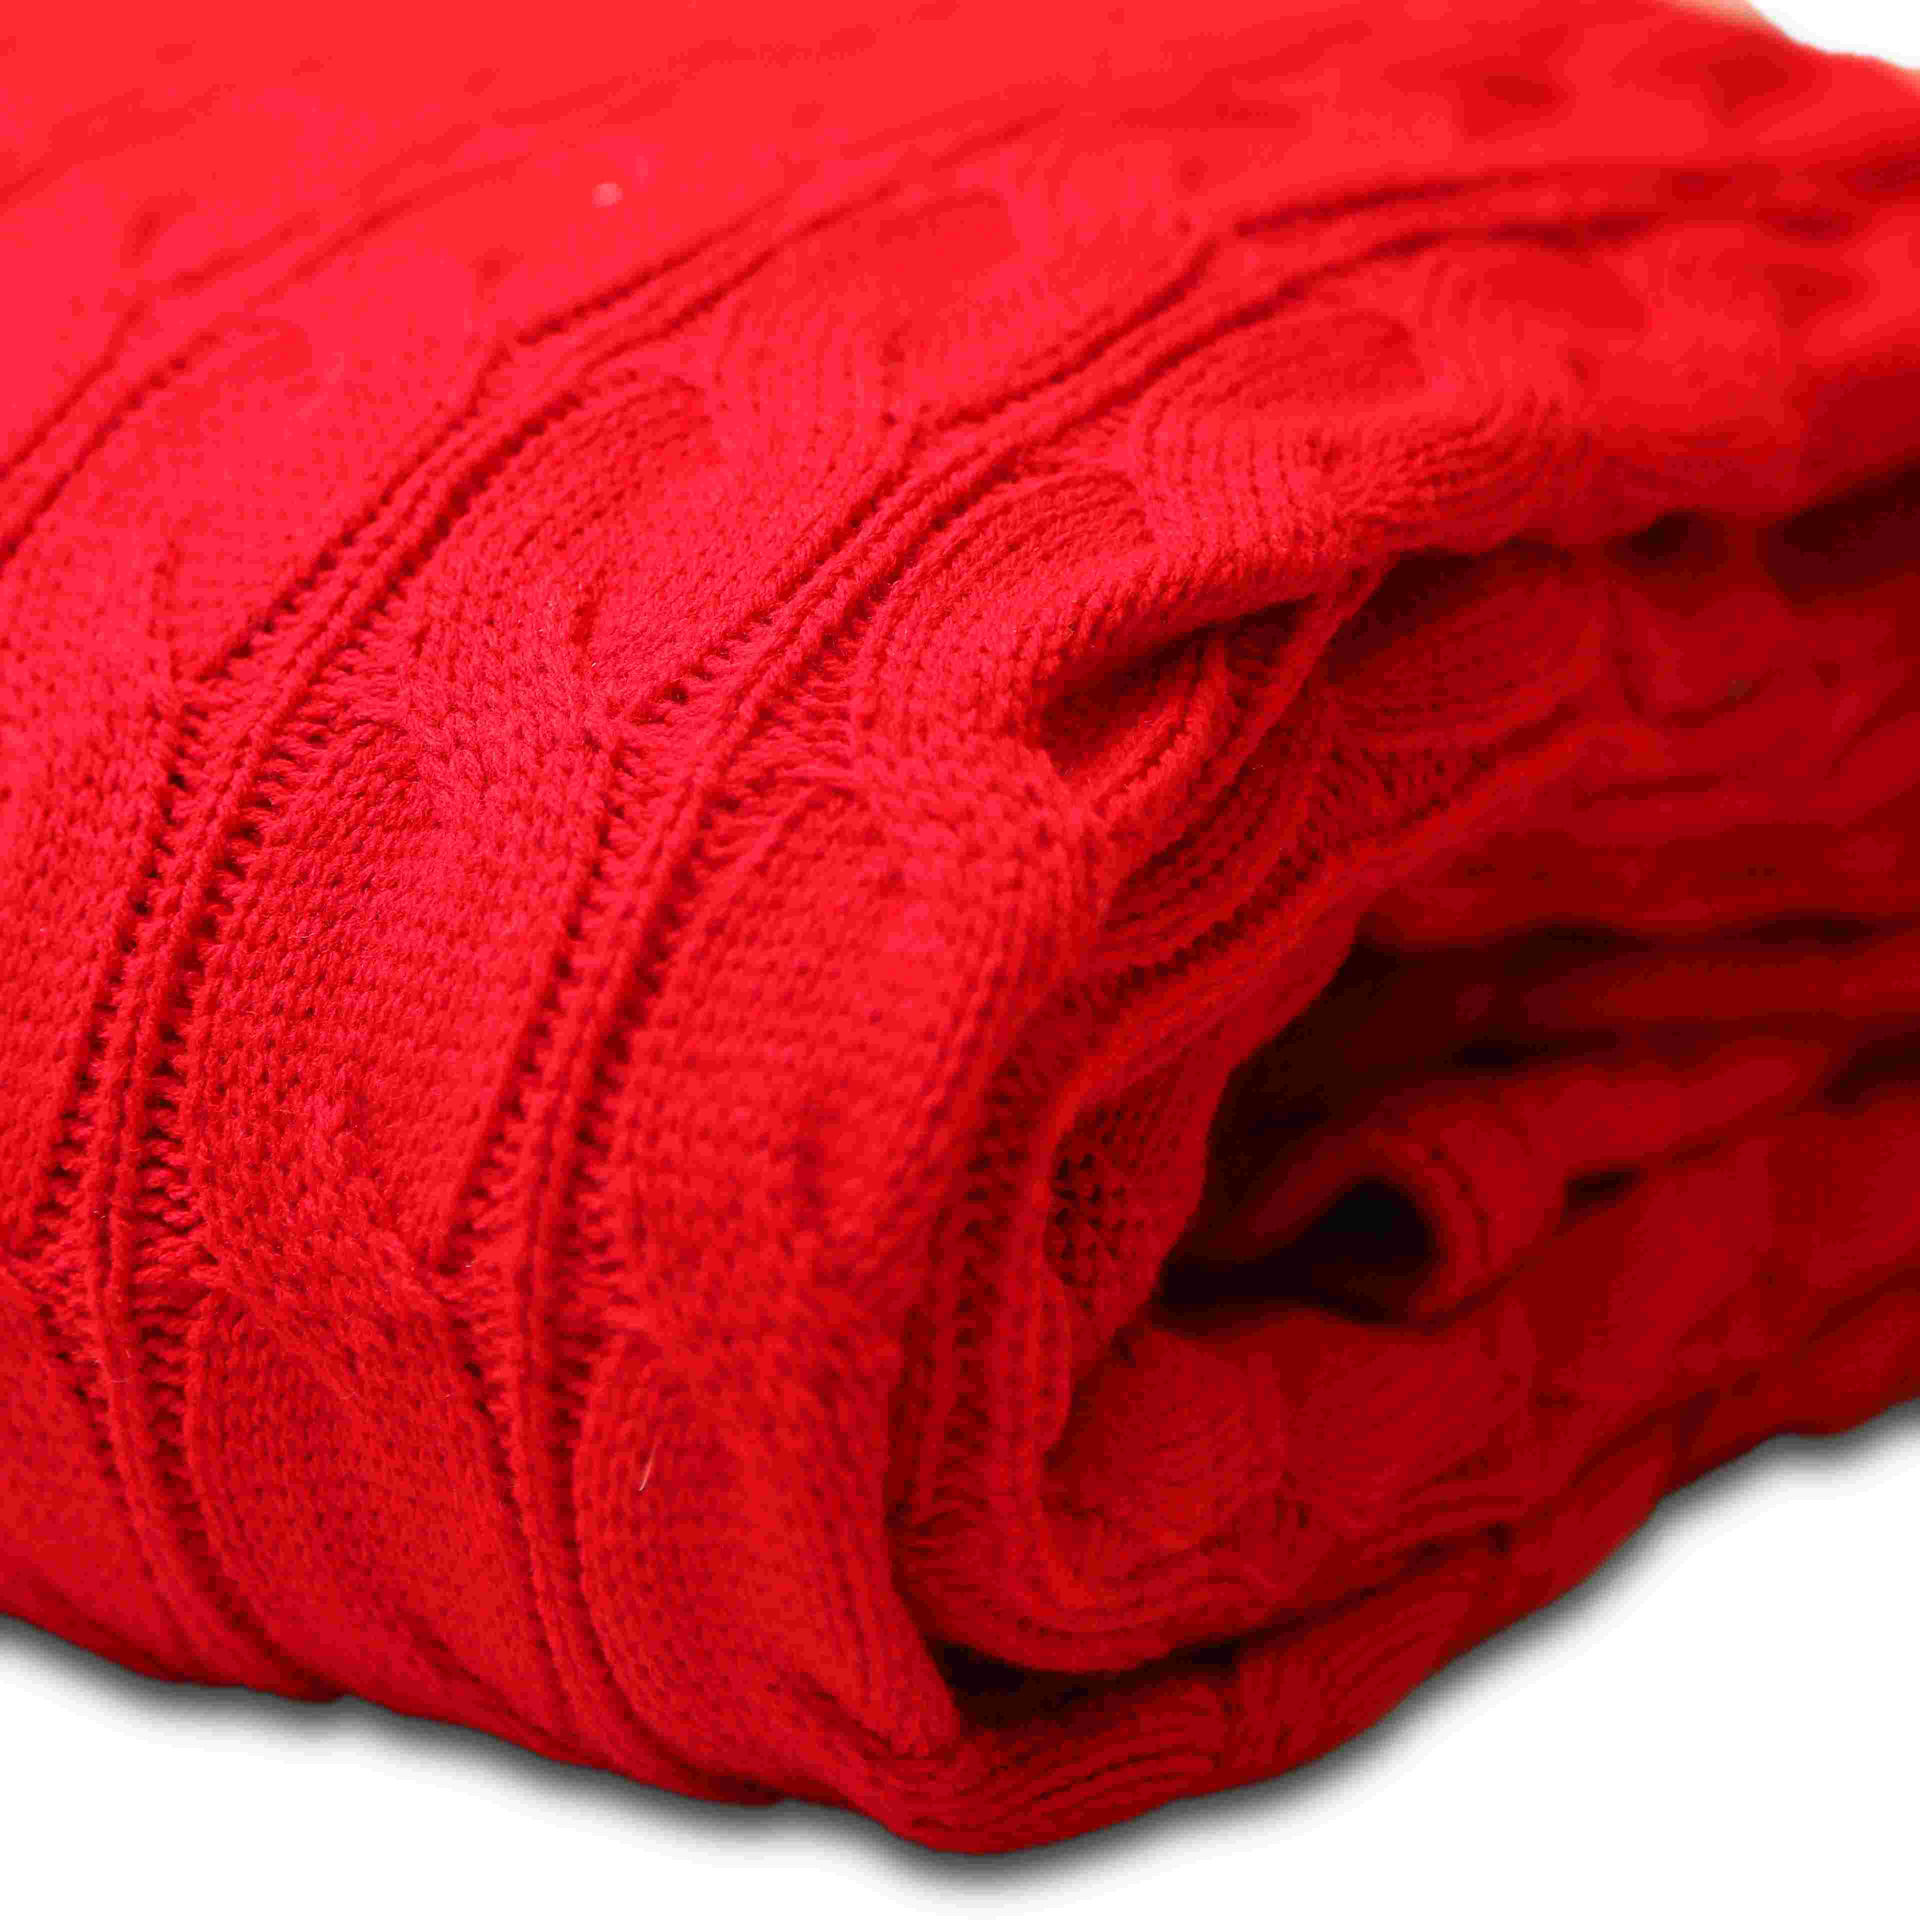 پتو بافت کازابل طرح کد 1 Casabel Texture Blanket single code 1 gray